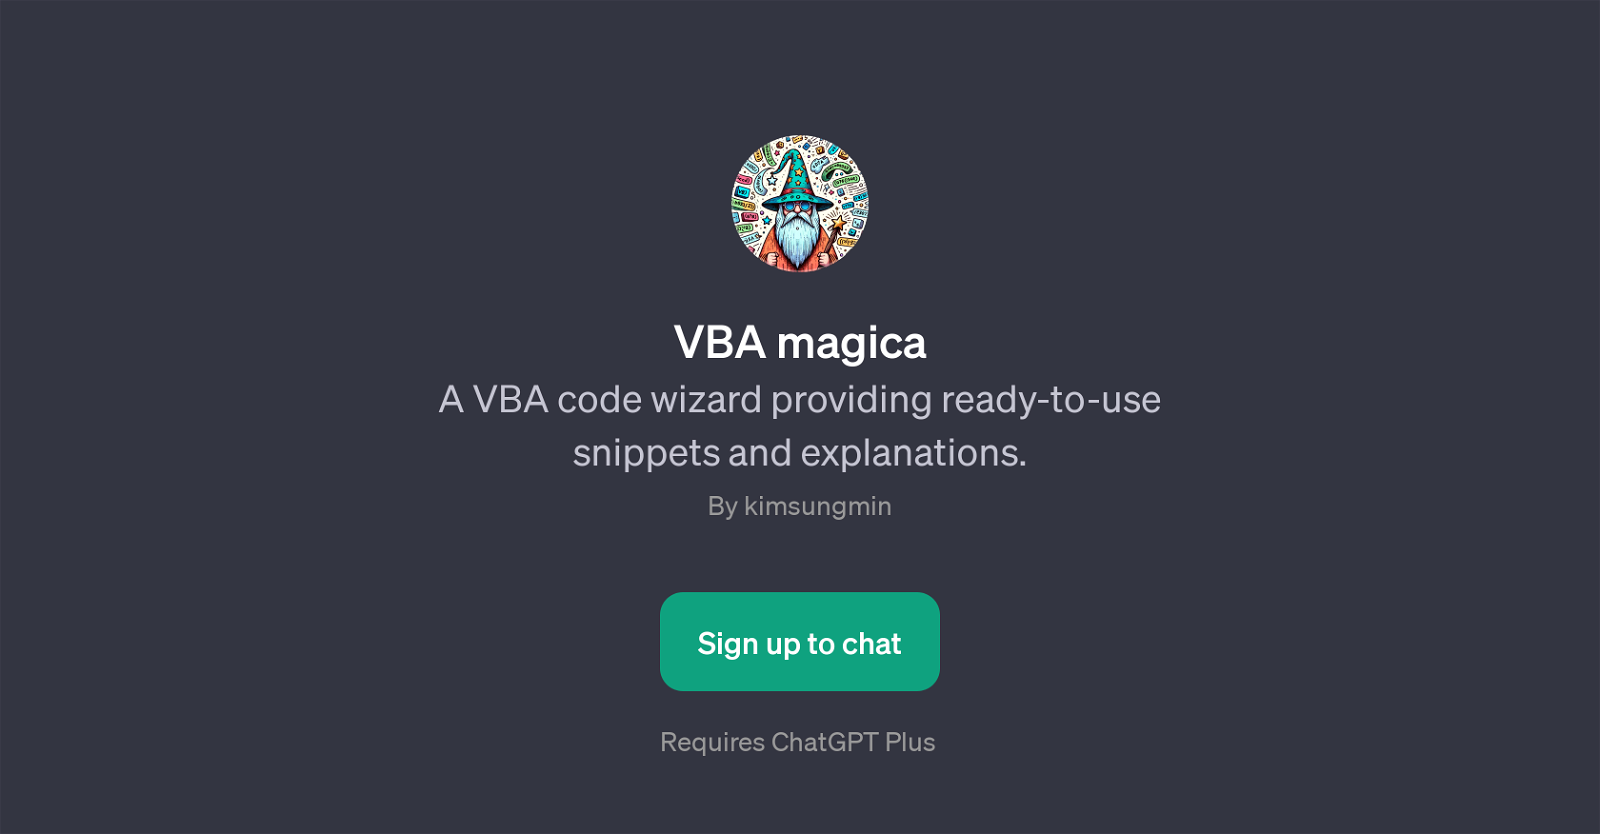 VBA magica website